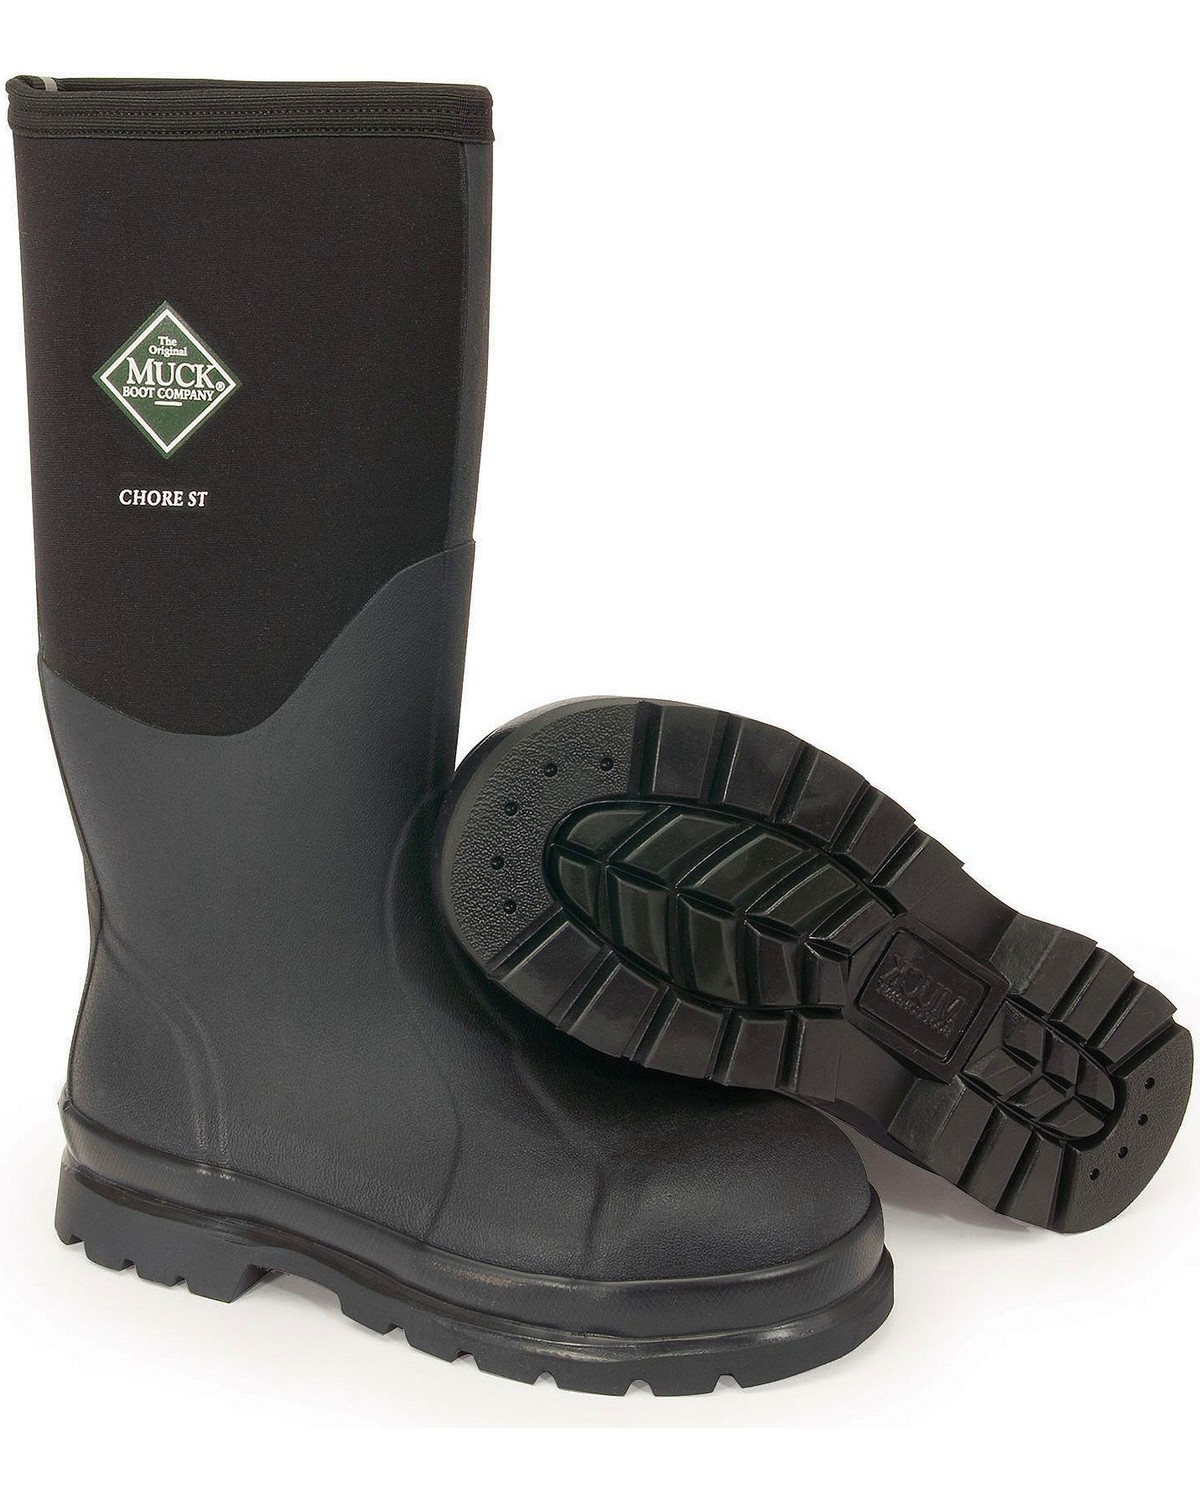 Chore Steel Toe Work Boots | Boot Barn